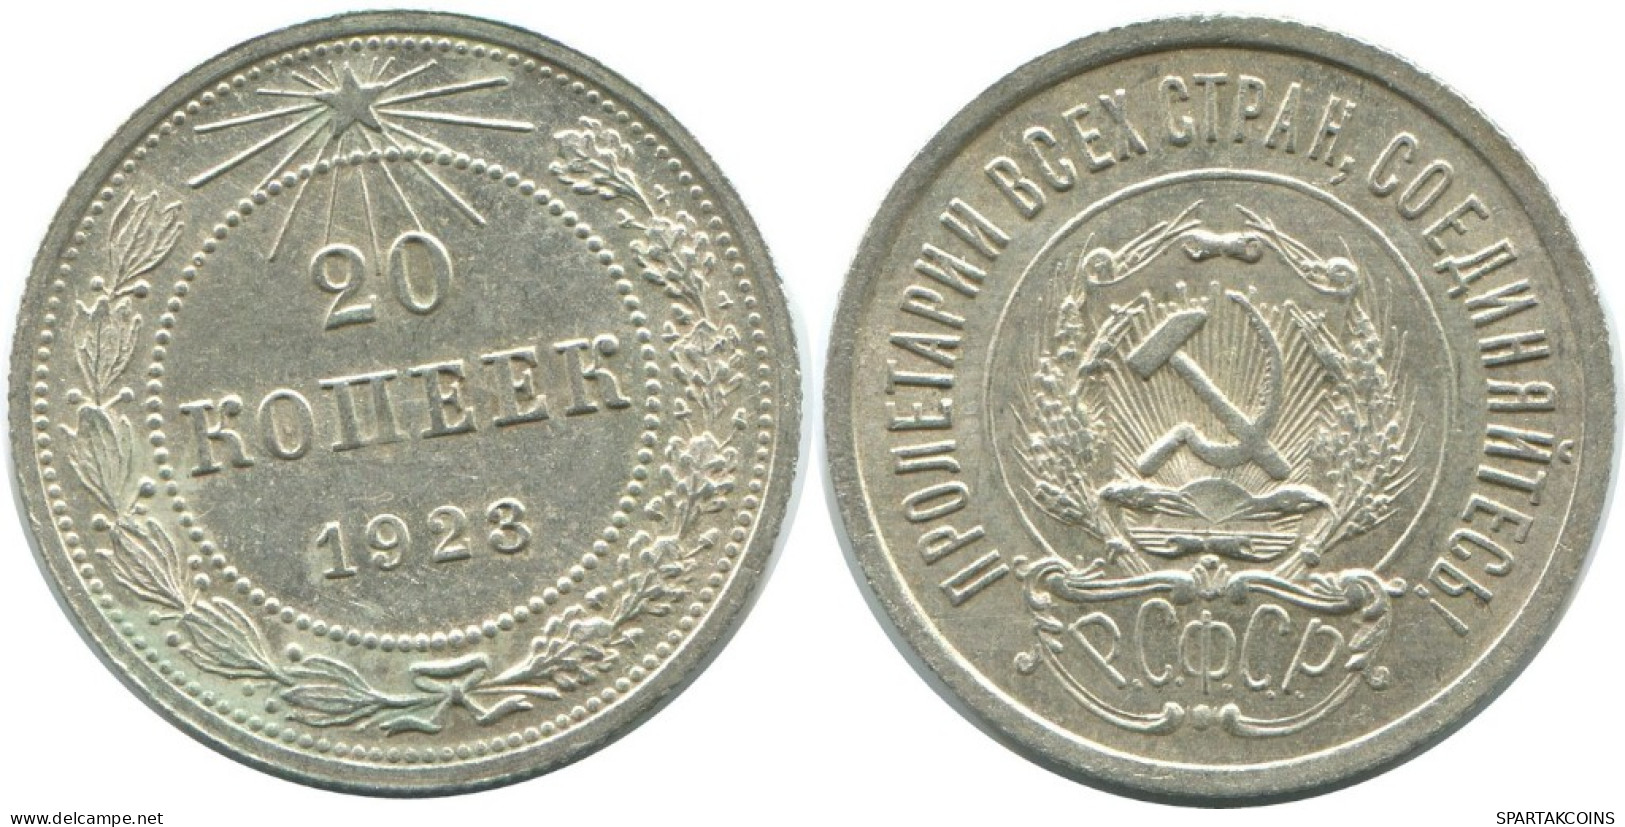 20 KOPEKS 1923 RUSSIA RSFSR SILVER Coin HIGH GRADE #AF558.4.U.A - Russia